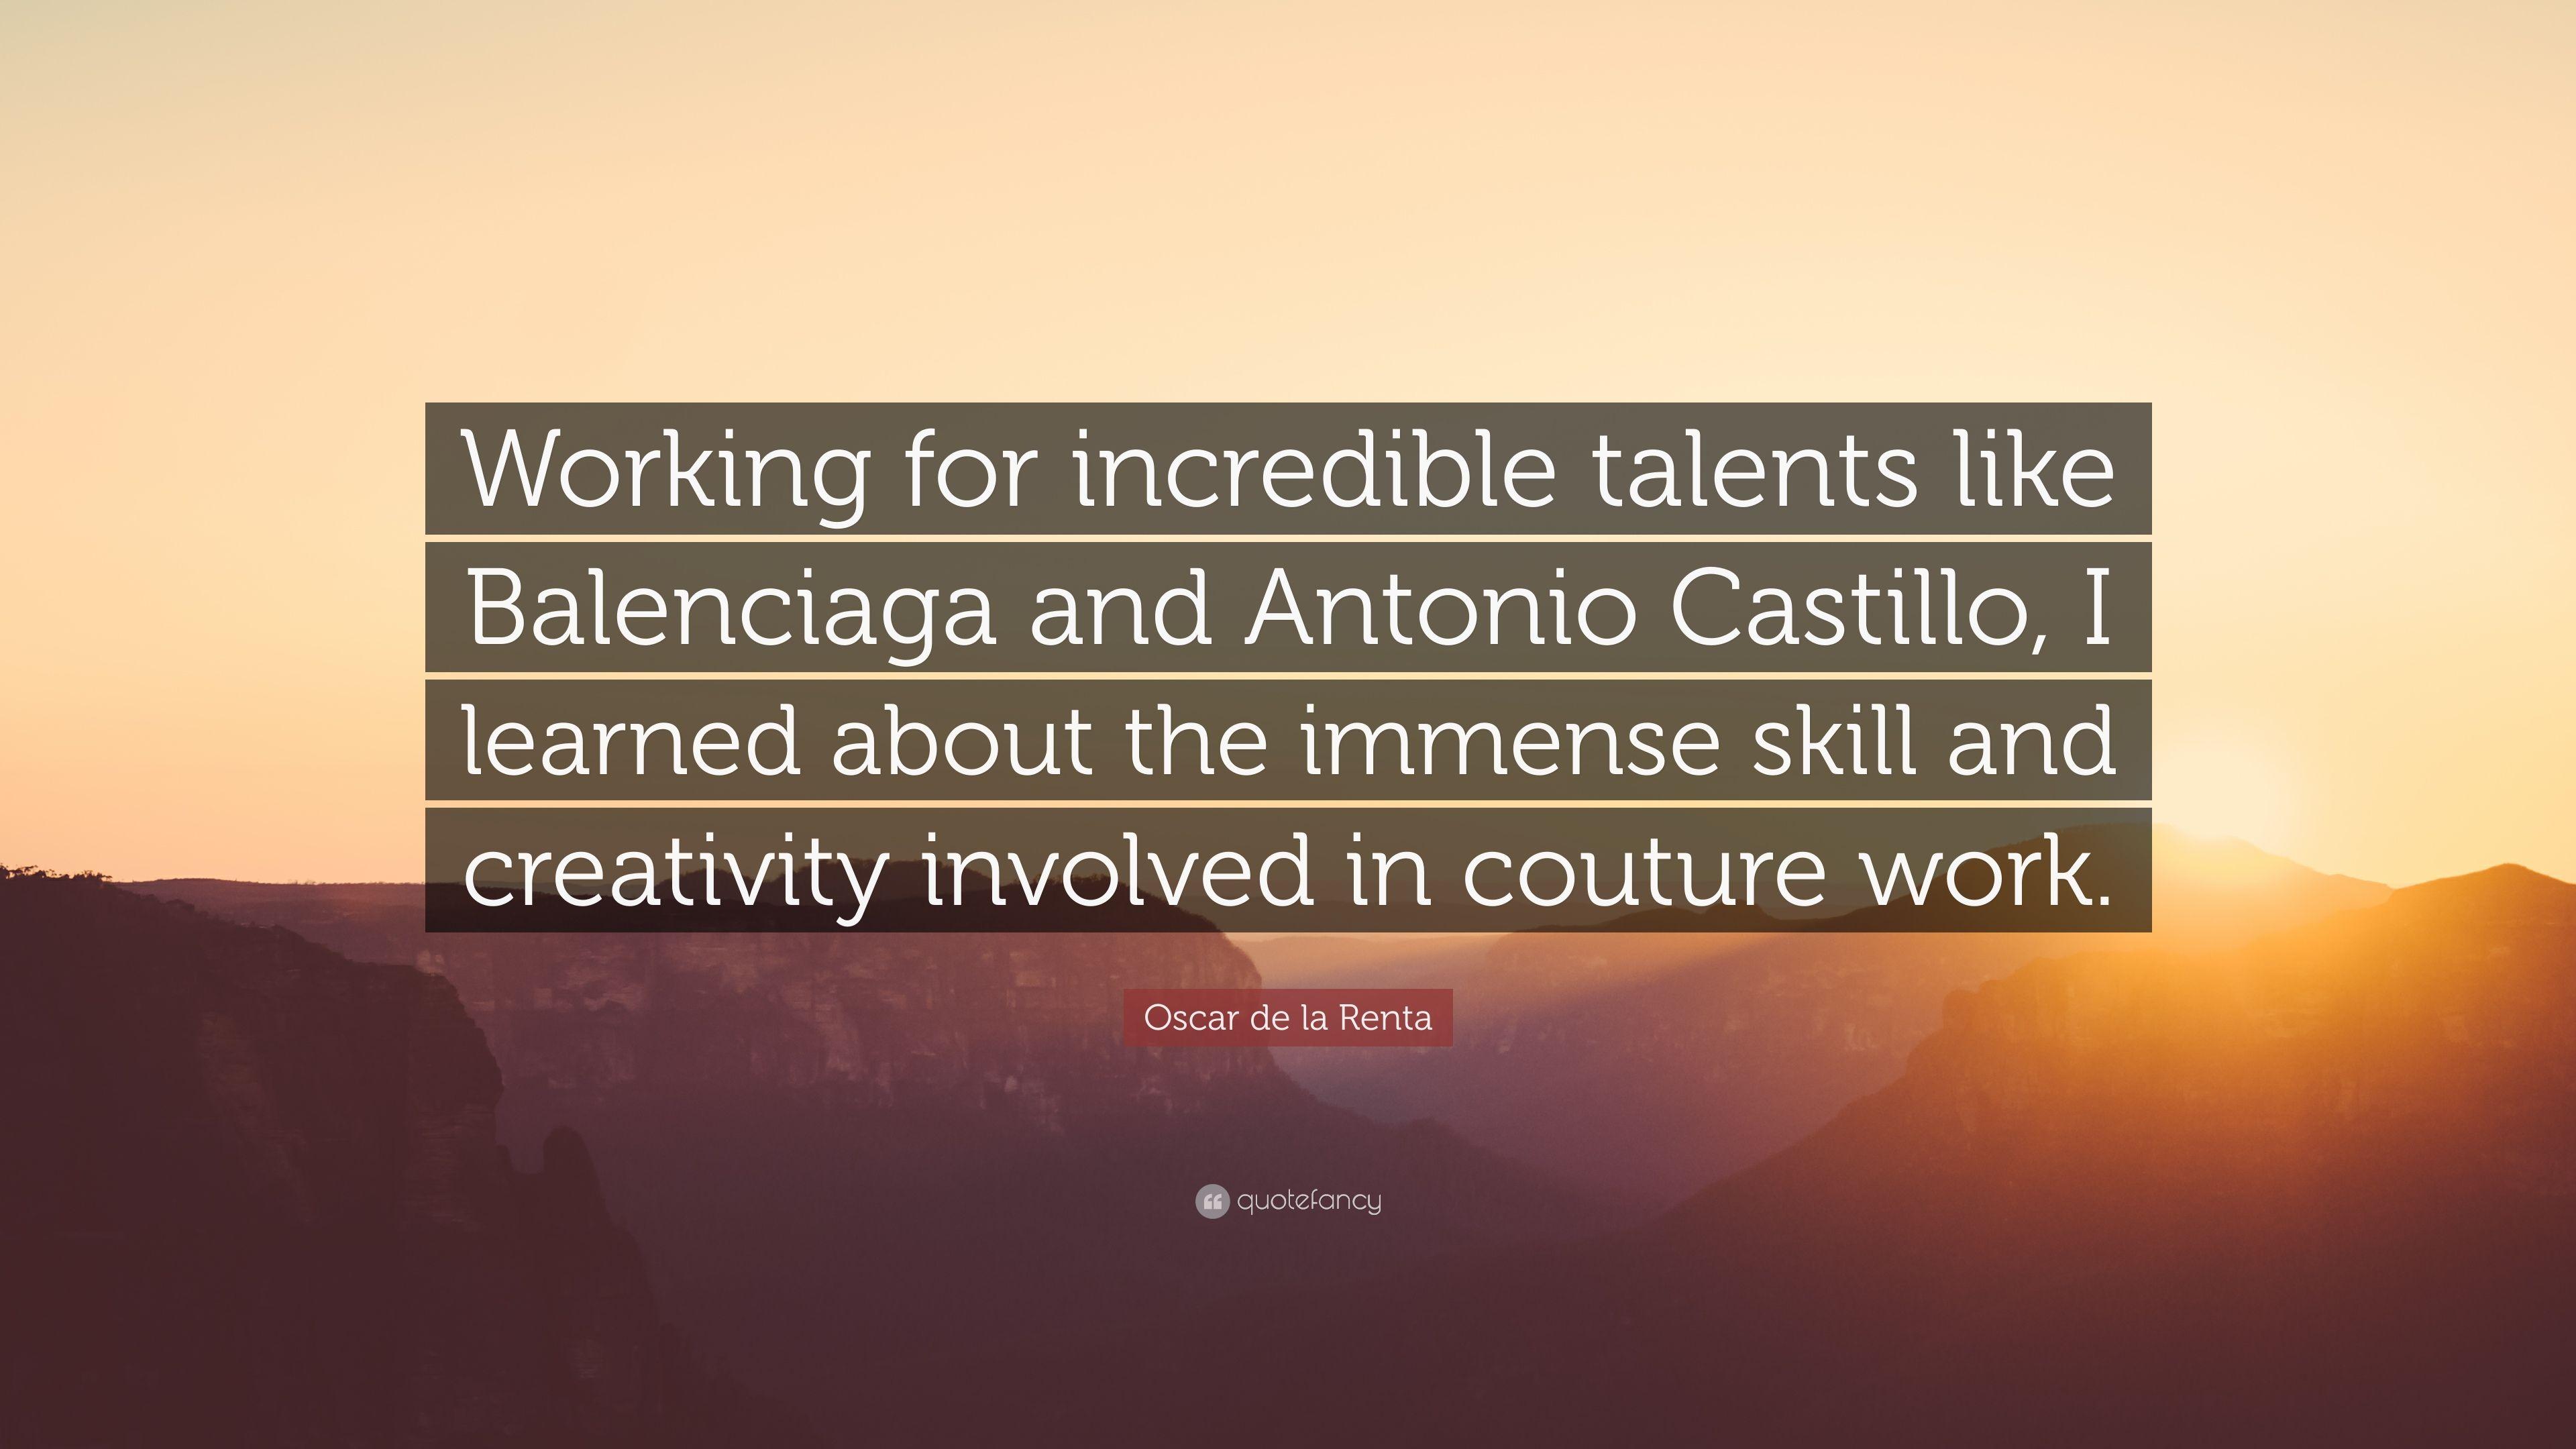 Oscar de la Renta Quote: “Working for incredible talents like